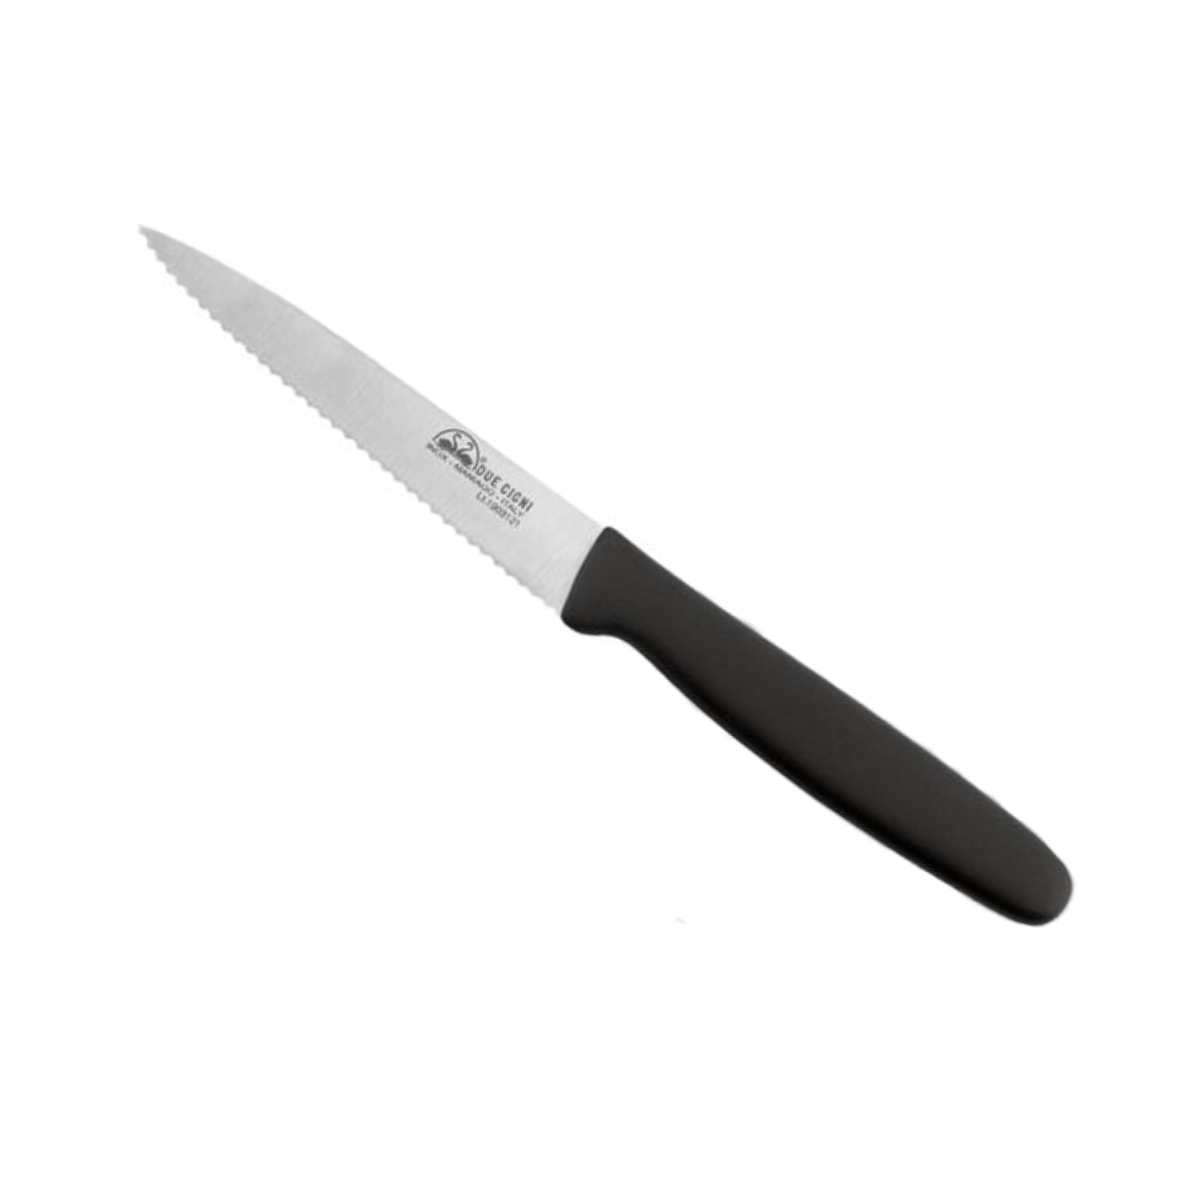 Basics 4 Inch Steel Kitchen Serrated Paring Knife